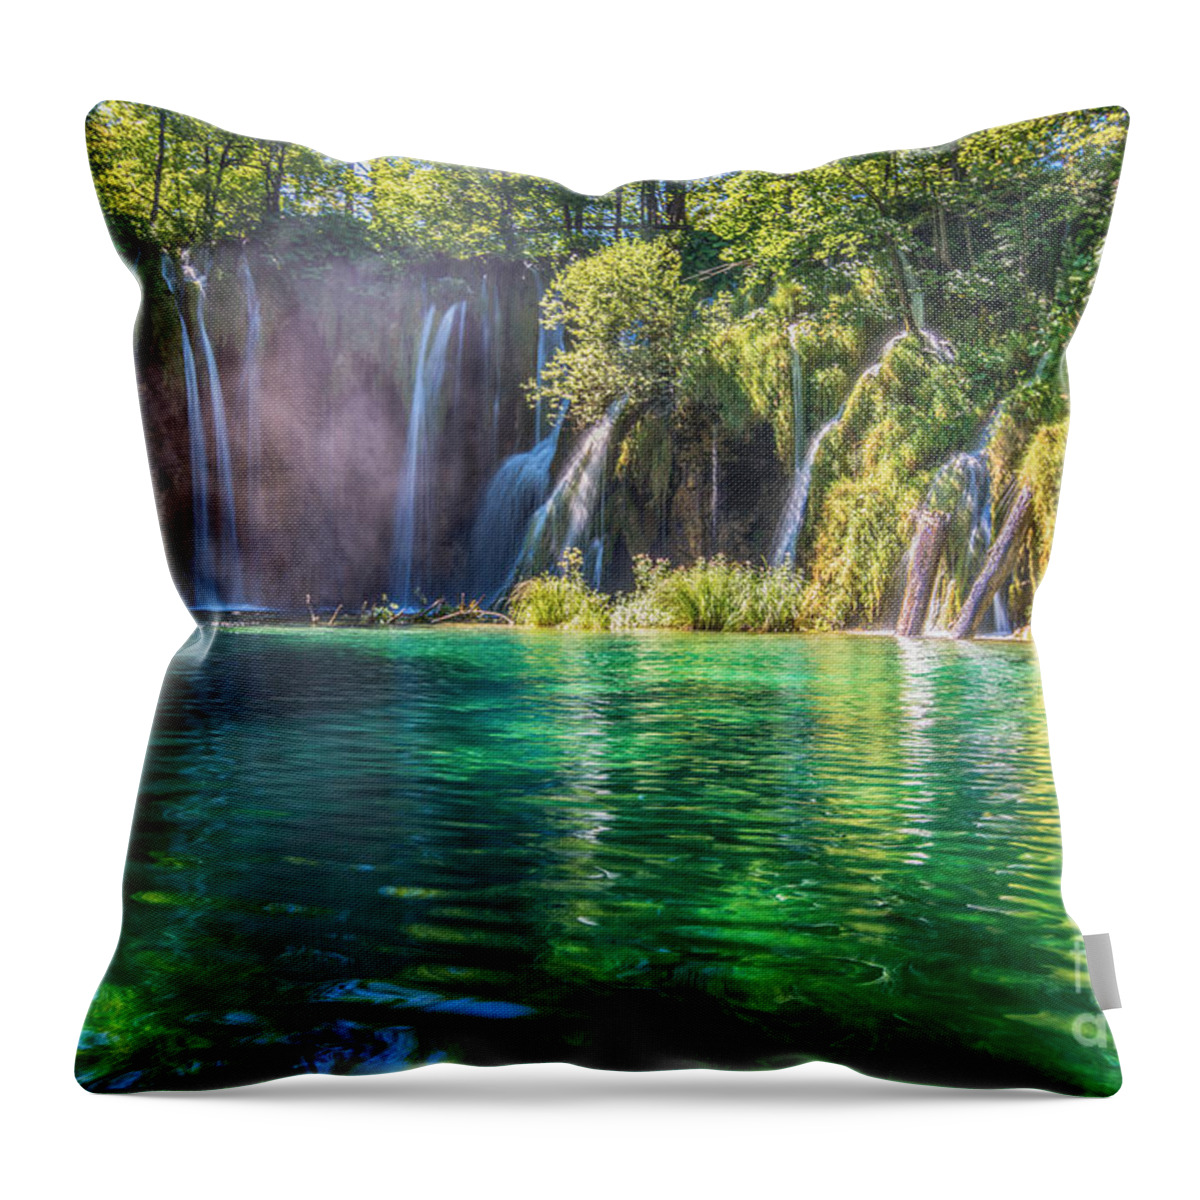 Croatia Throw Pillow featuring the photograph Croatia fairy tales by Hannes Cmarits